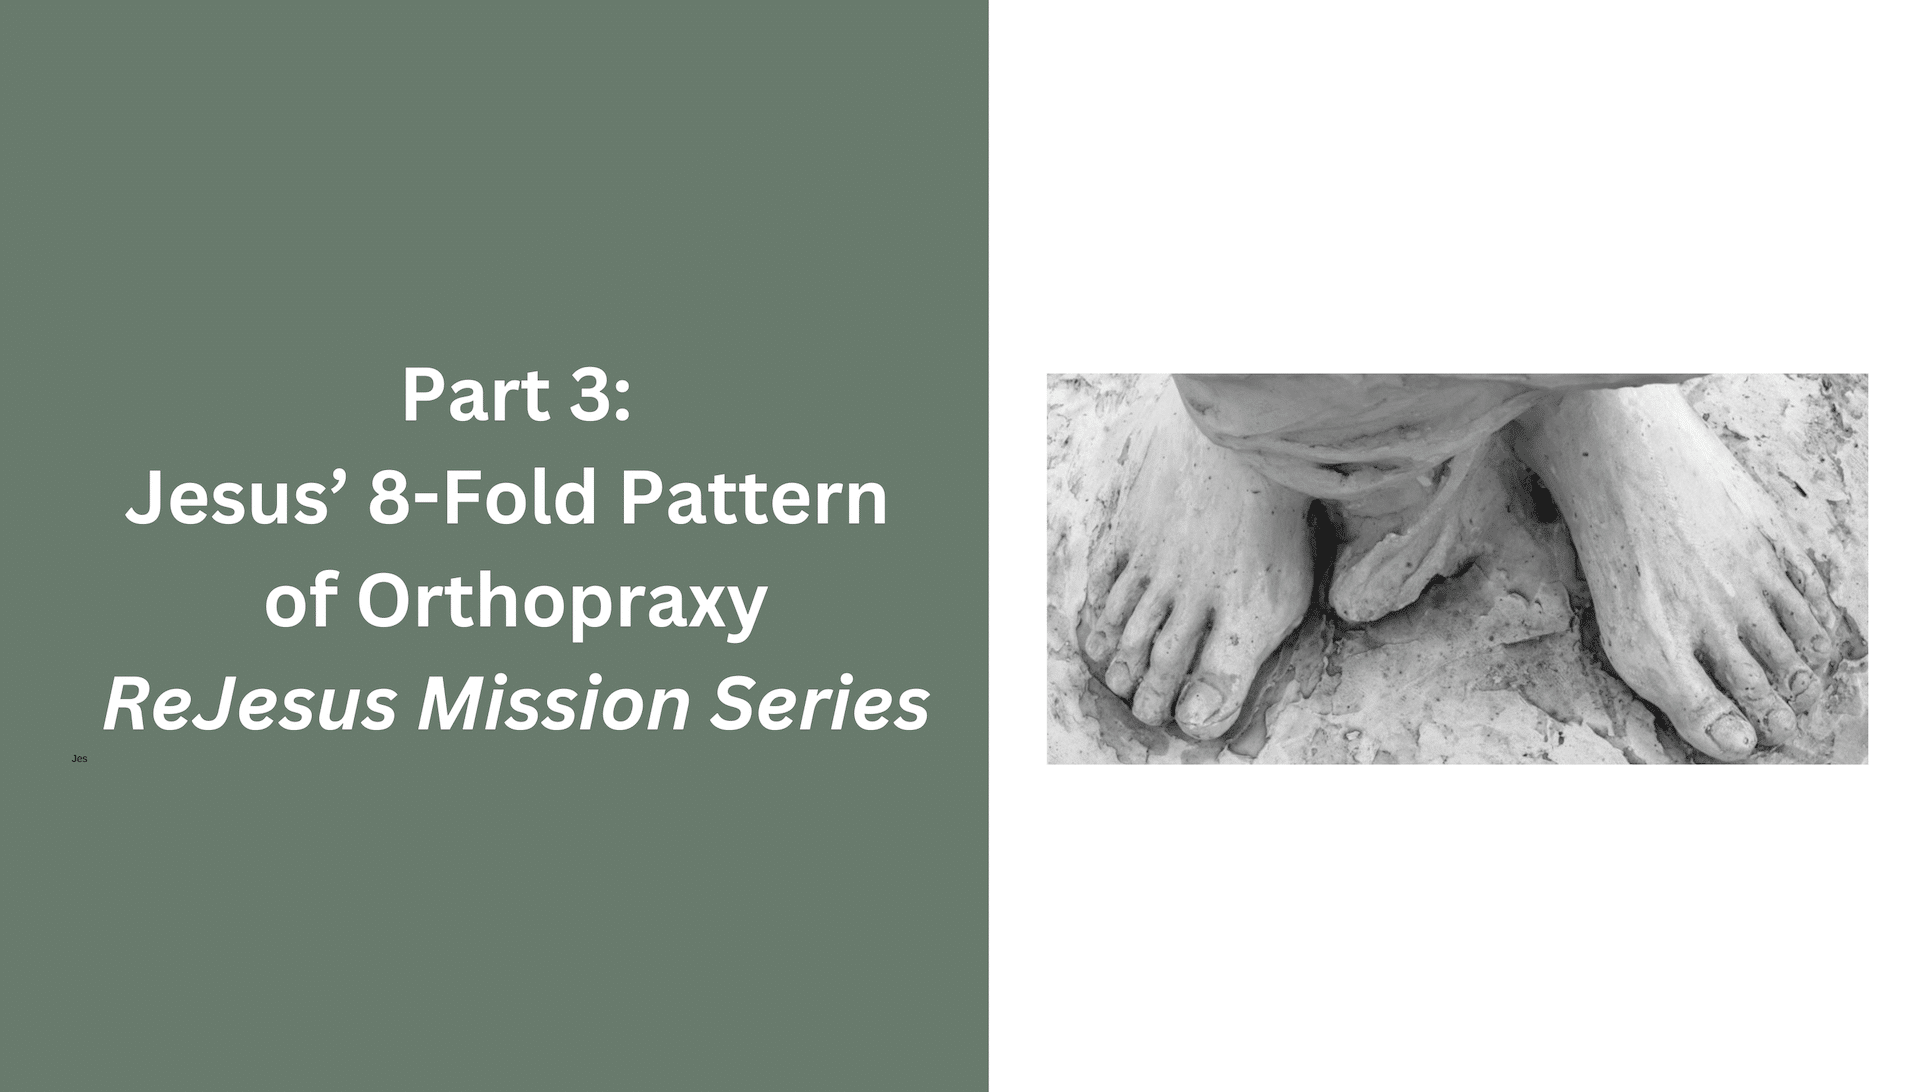 Part 3: Jesus' 8-fold pattern of orthopraxy